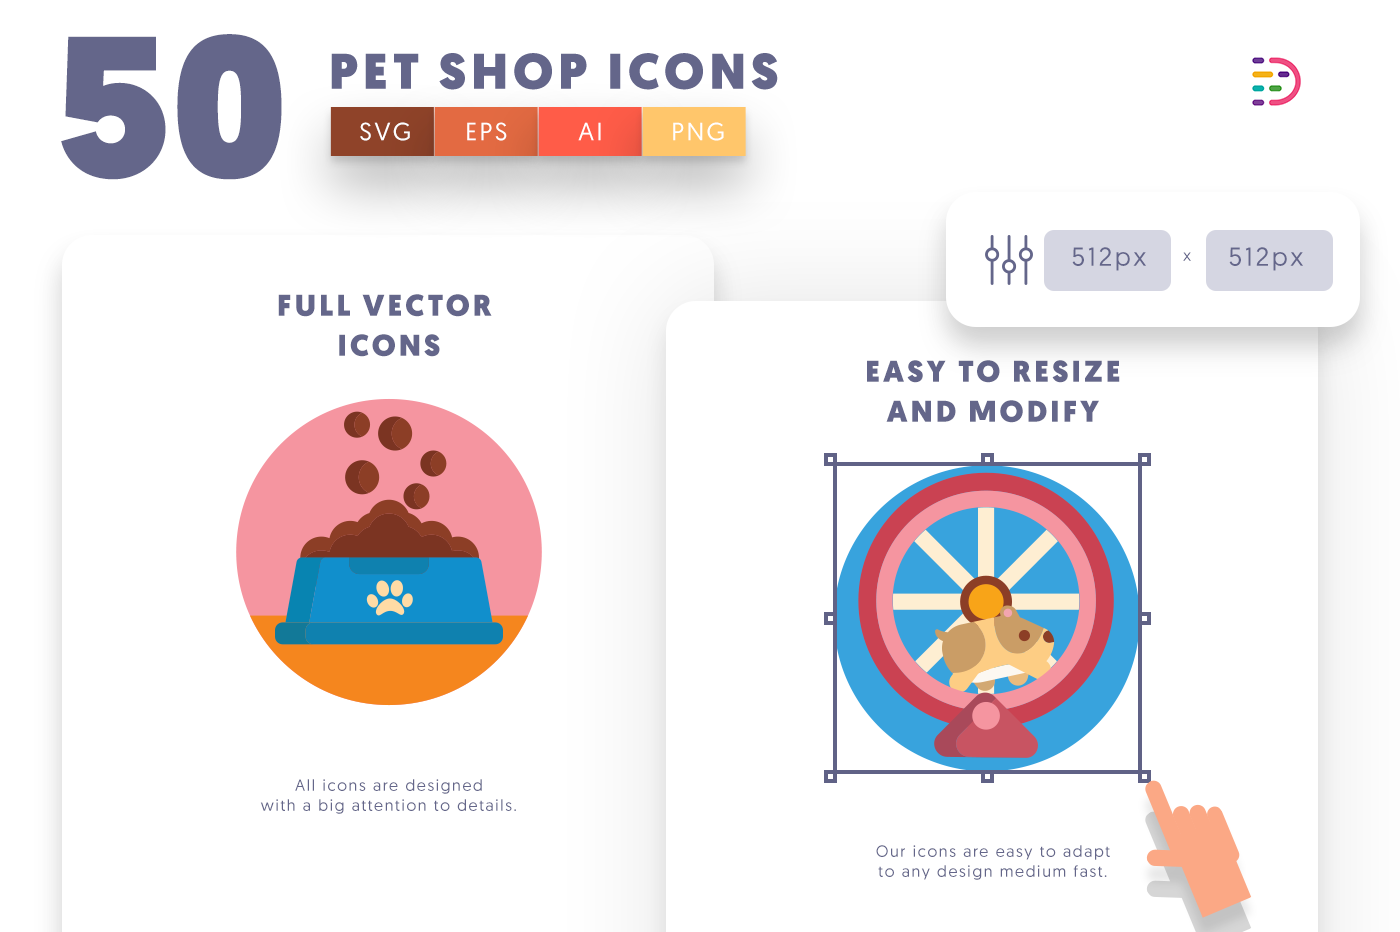 Full vector Petshop Icons